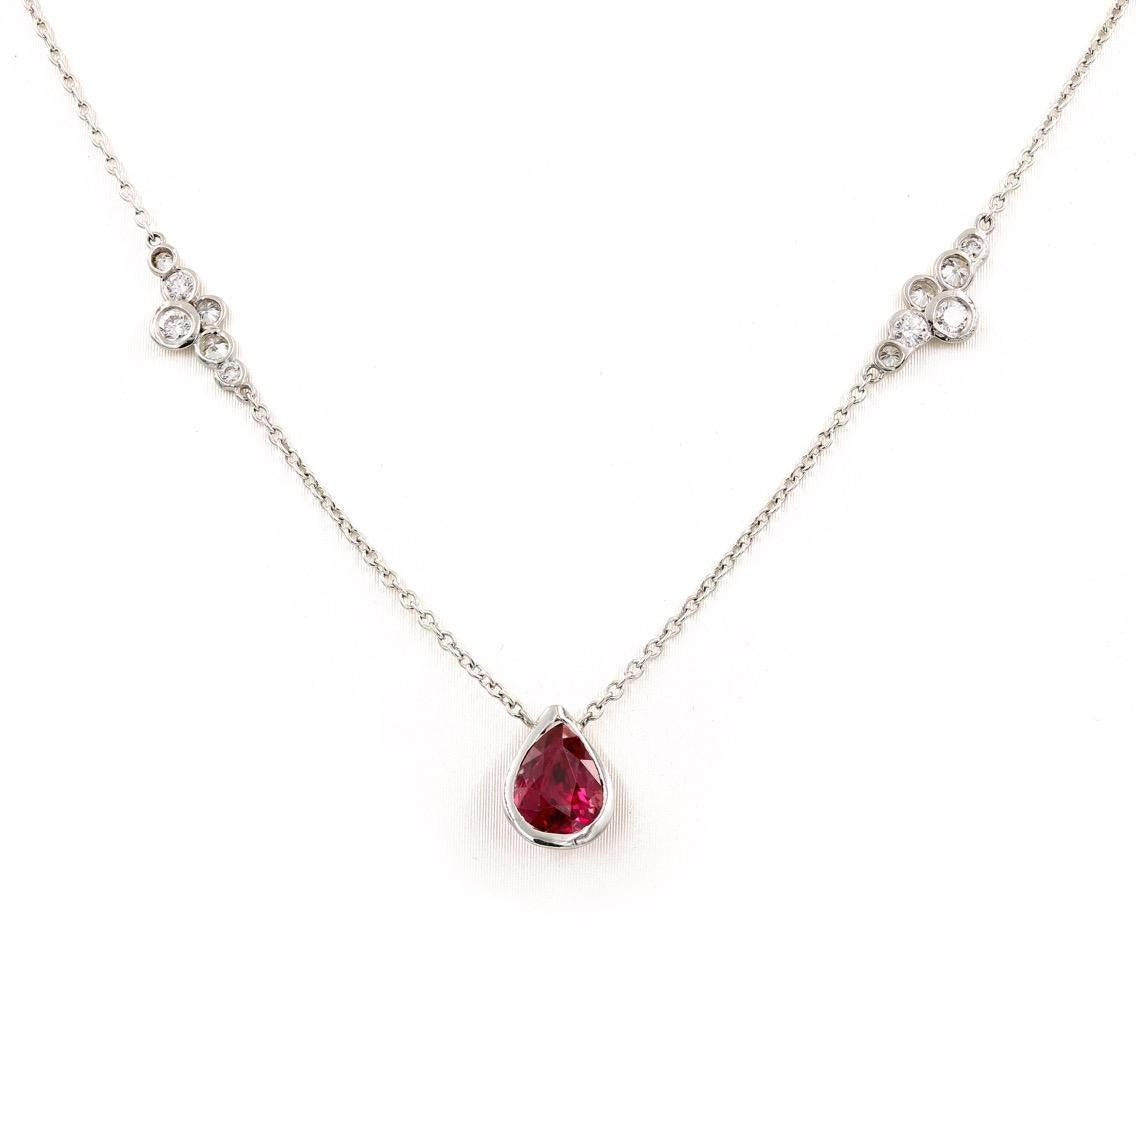 Lester Lampert Original Pirouette Diamond Necklace with Pear Shape Ruby Center (Zeitgenössisch)